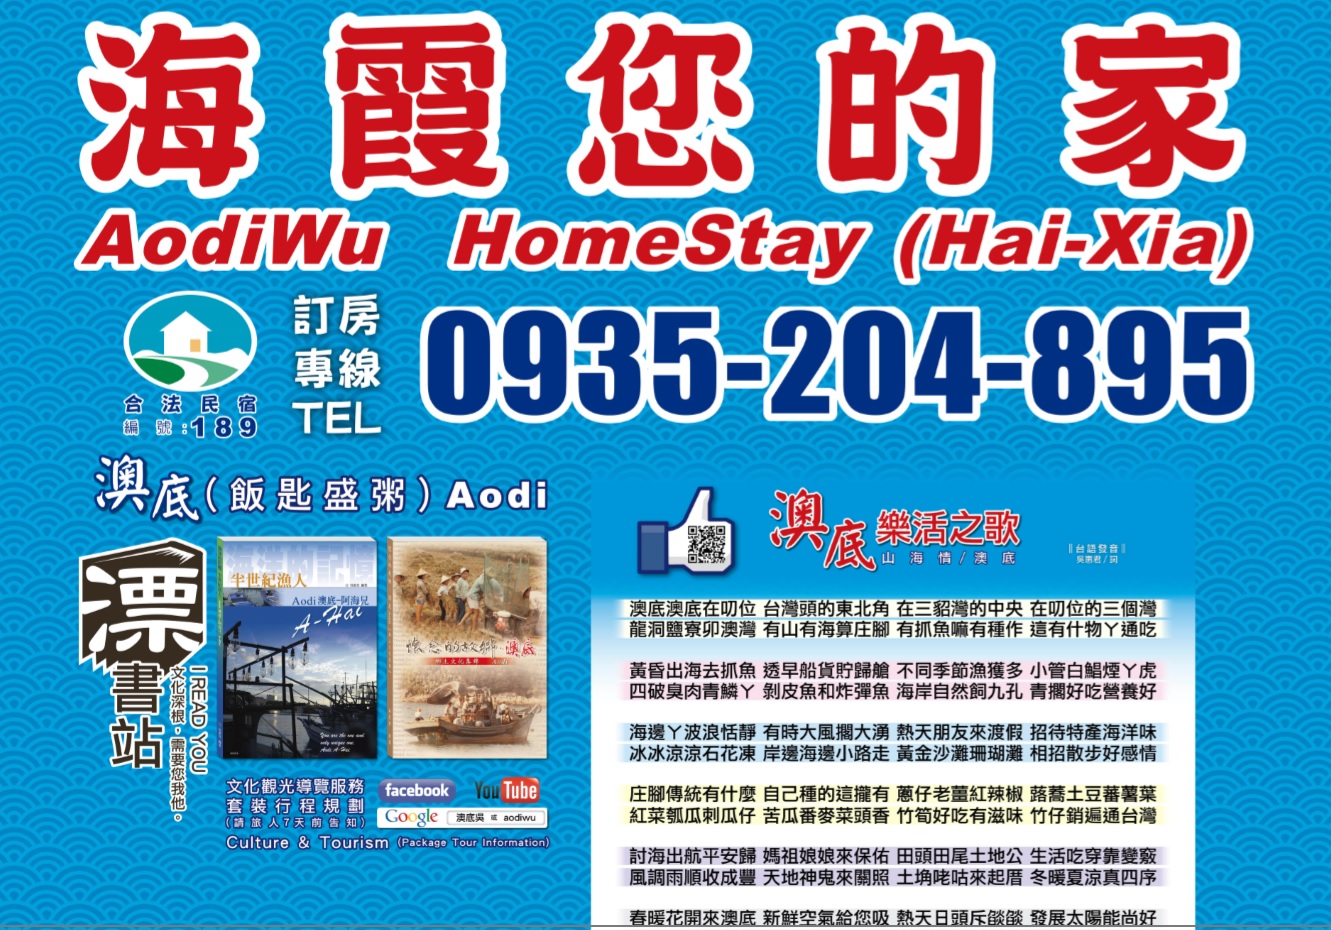 Hai-Xia Your Home  (Aodiwu Homestay) 